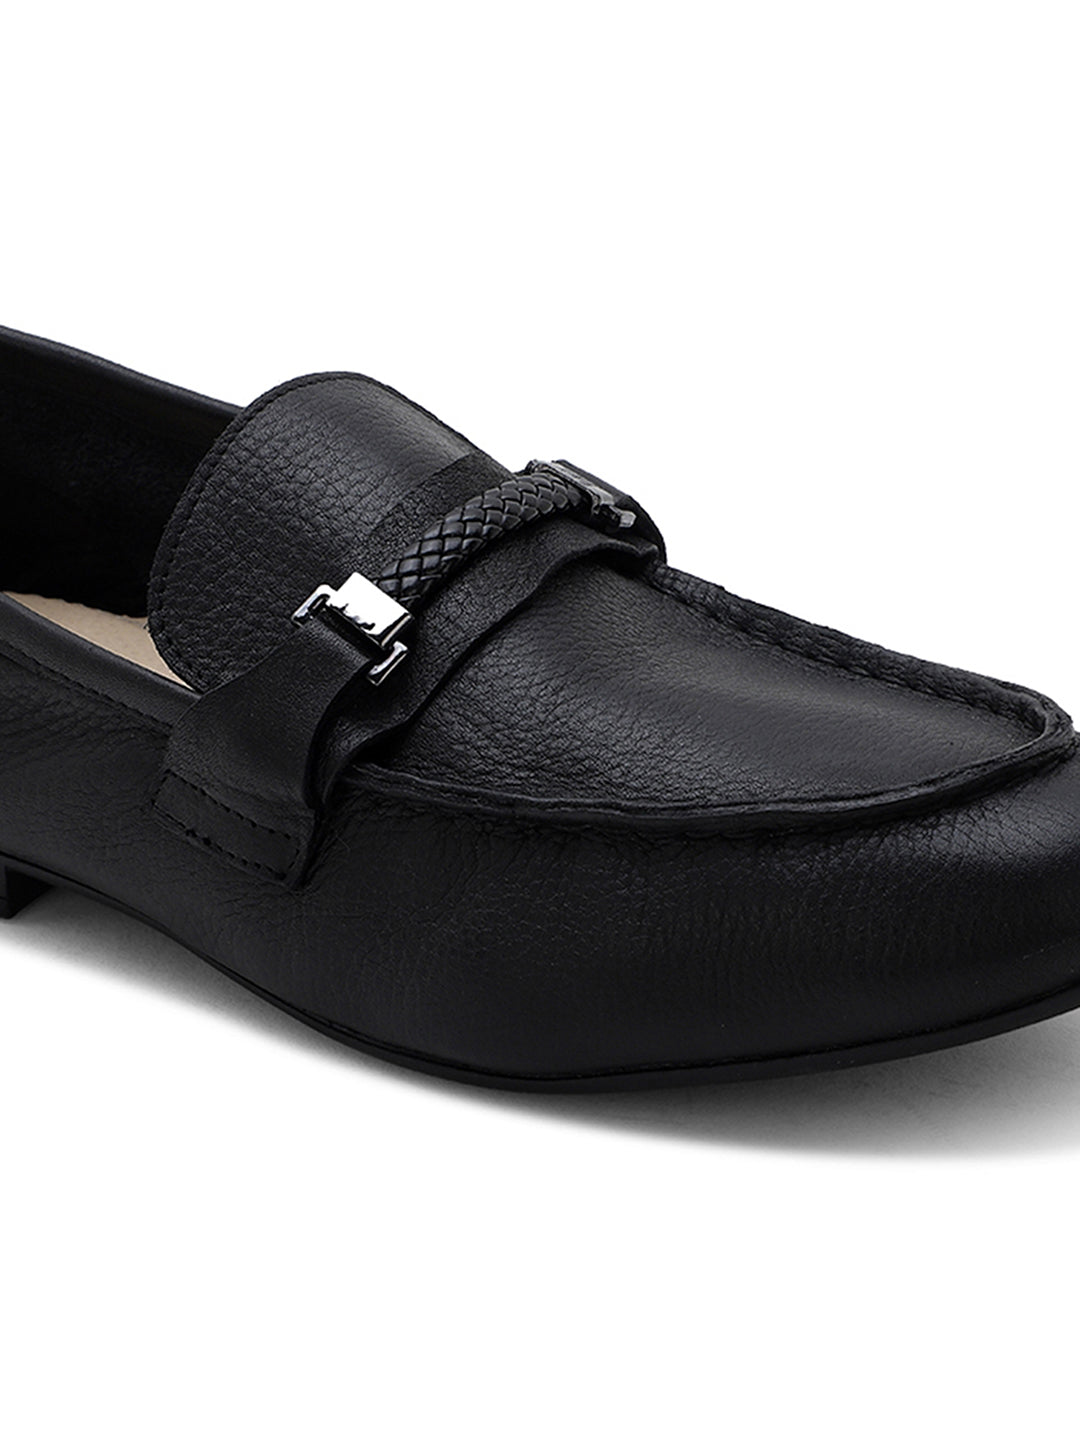 Ezok Men Black Leather Semi Formal Shoes